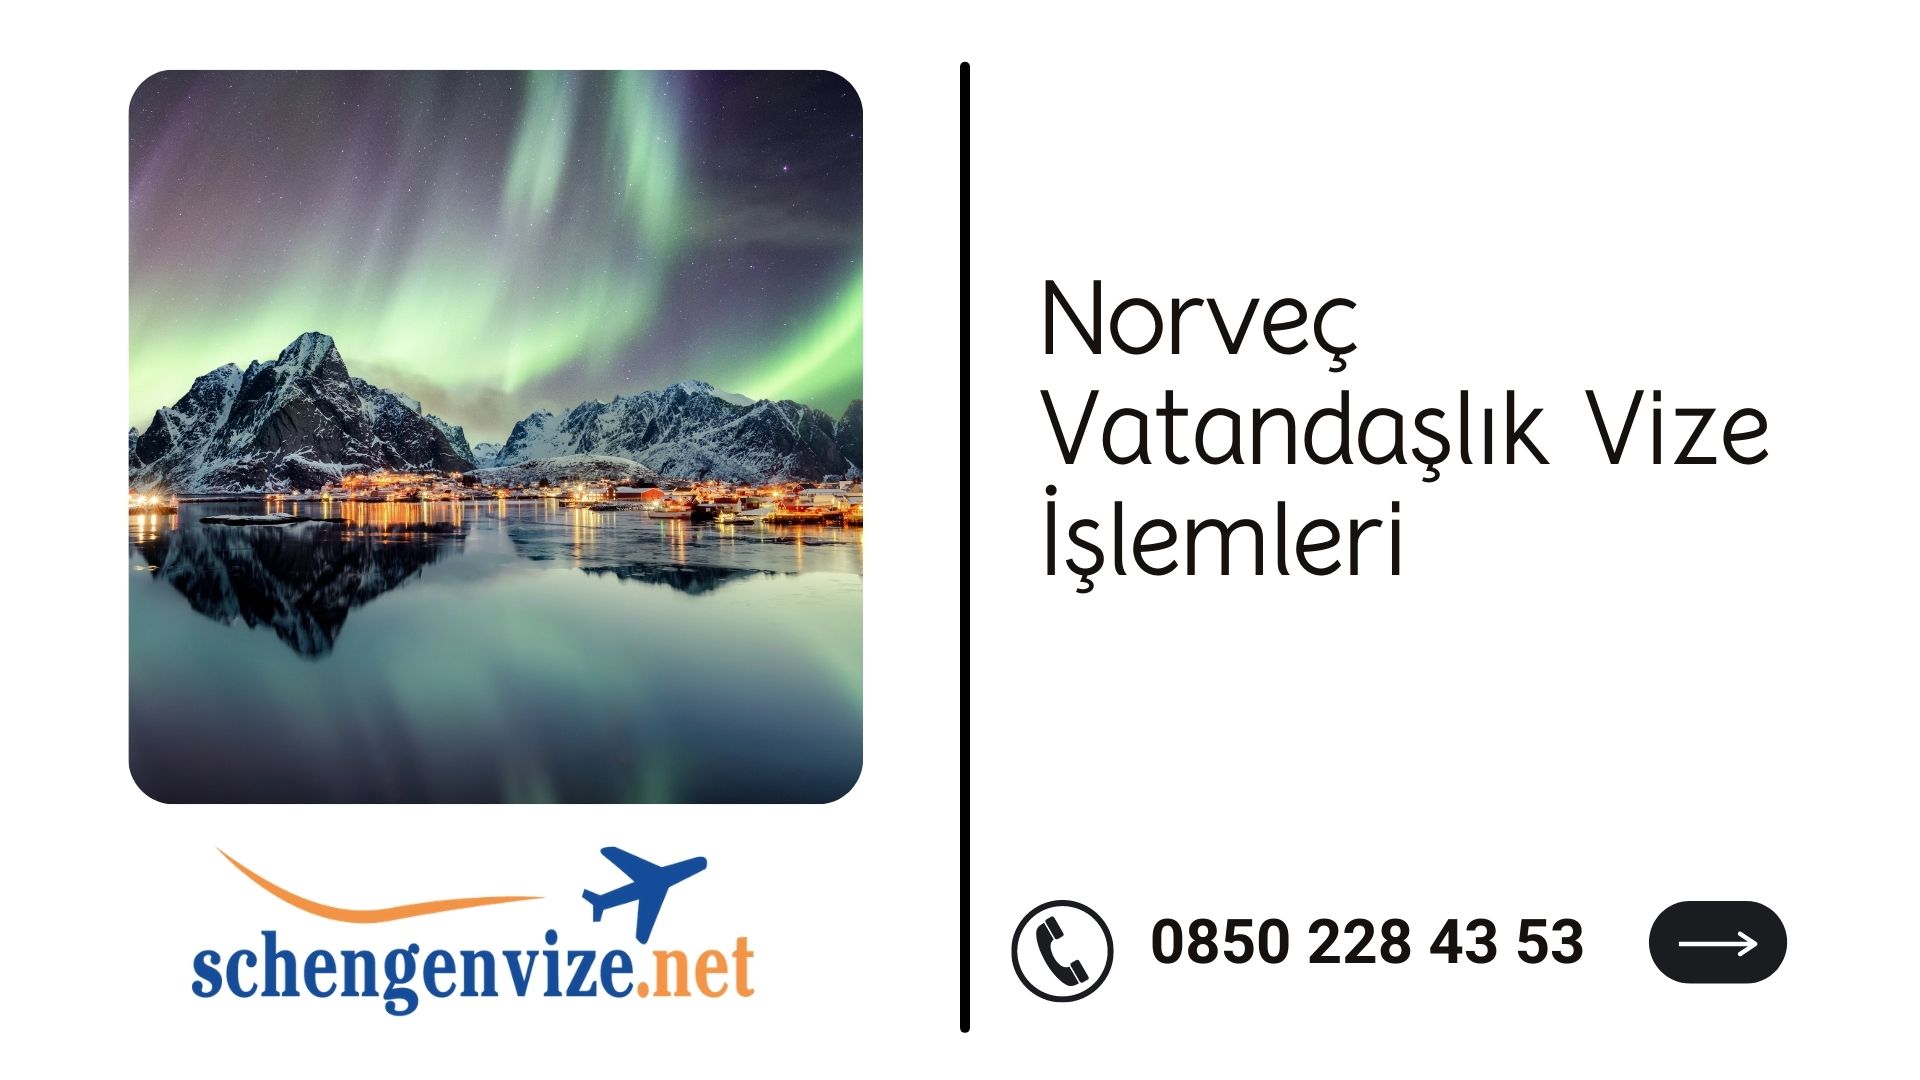 norvec vatandaslik vize islemleri schengen vize